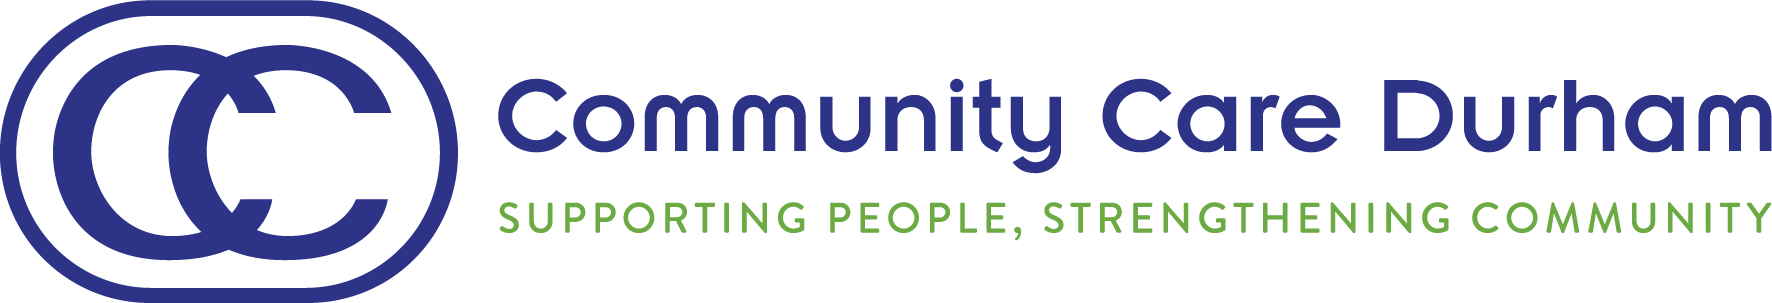 Organization logo of Community Care Durham